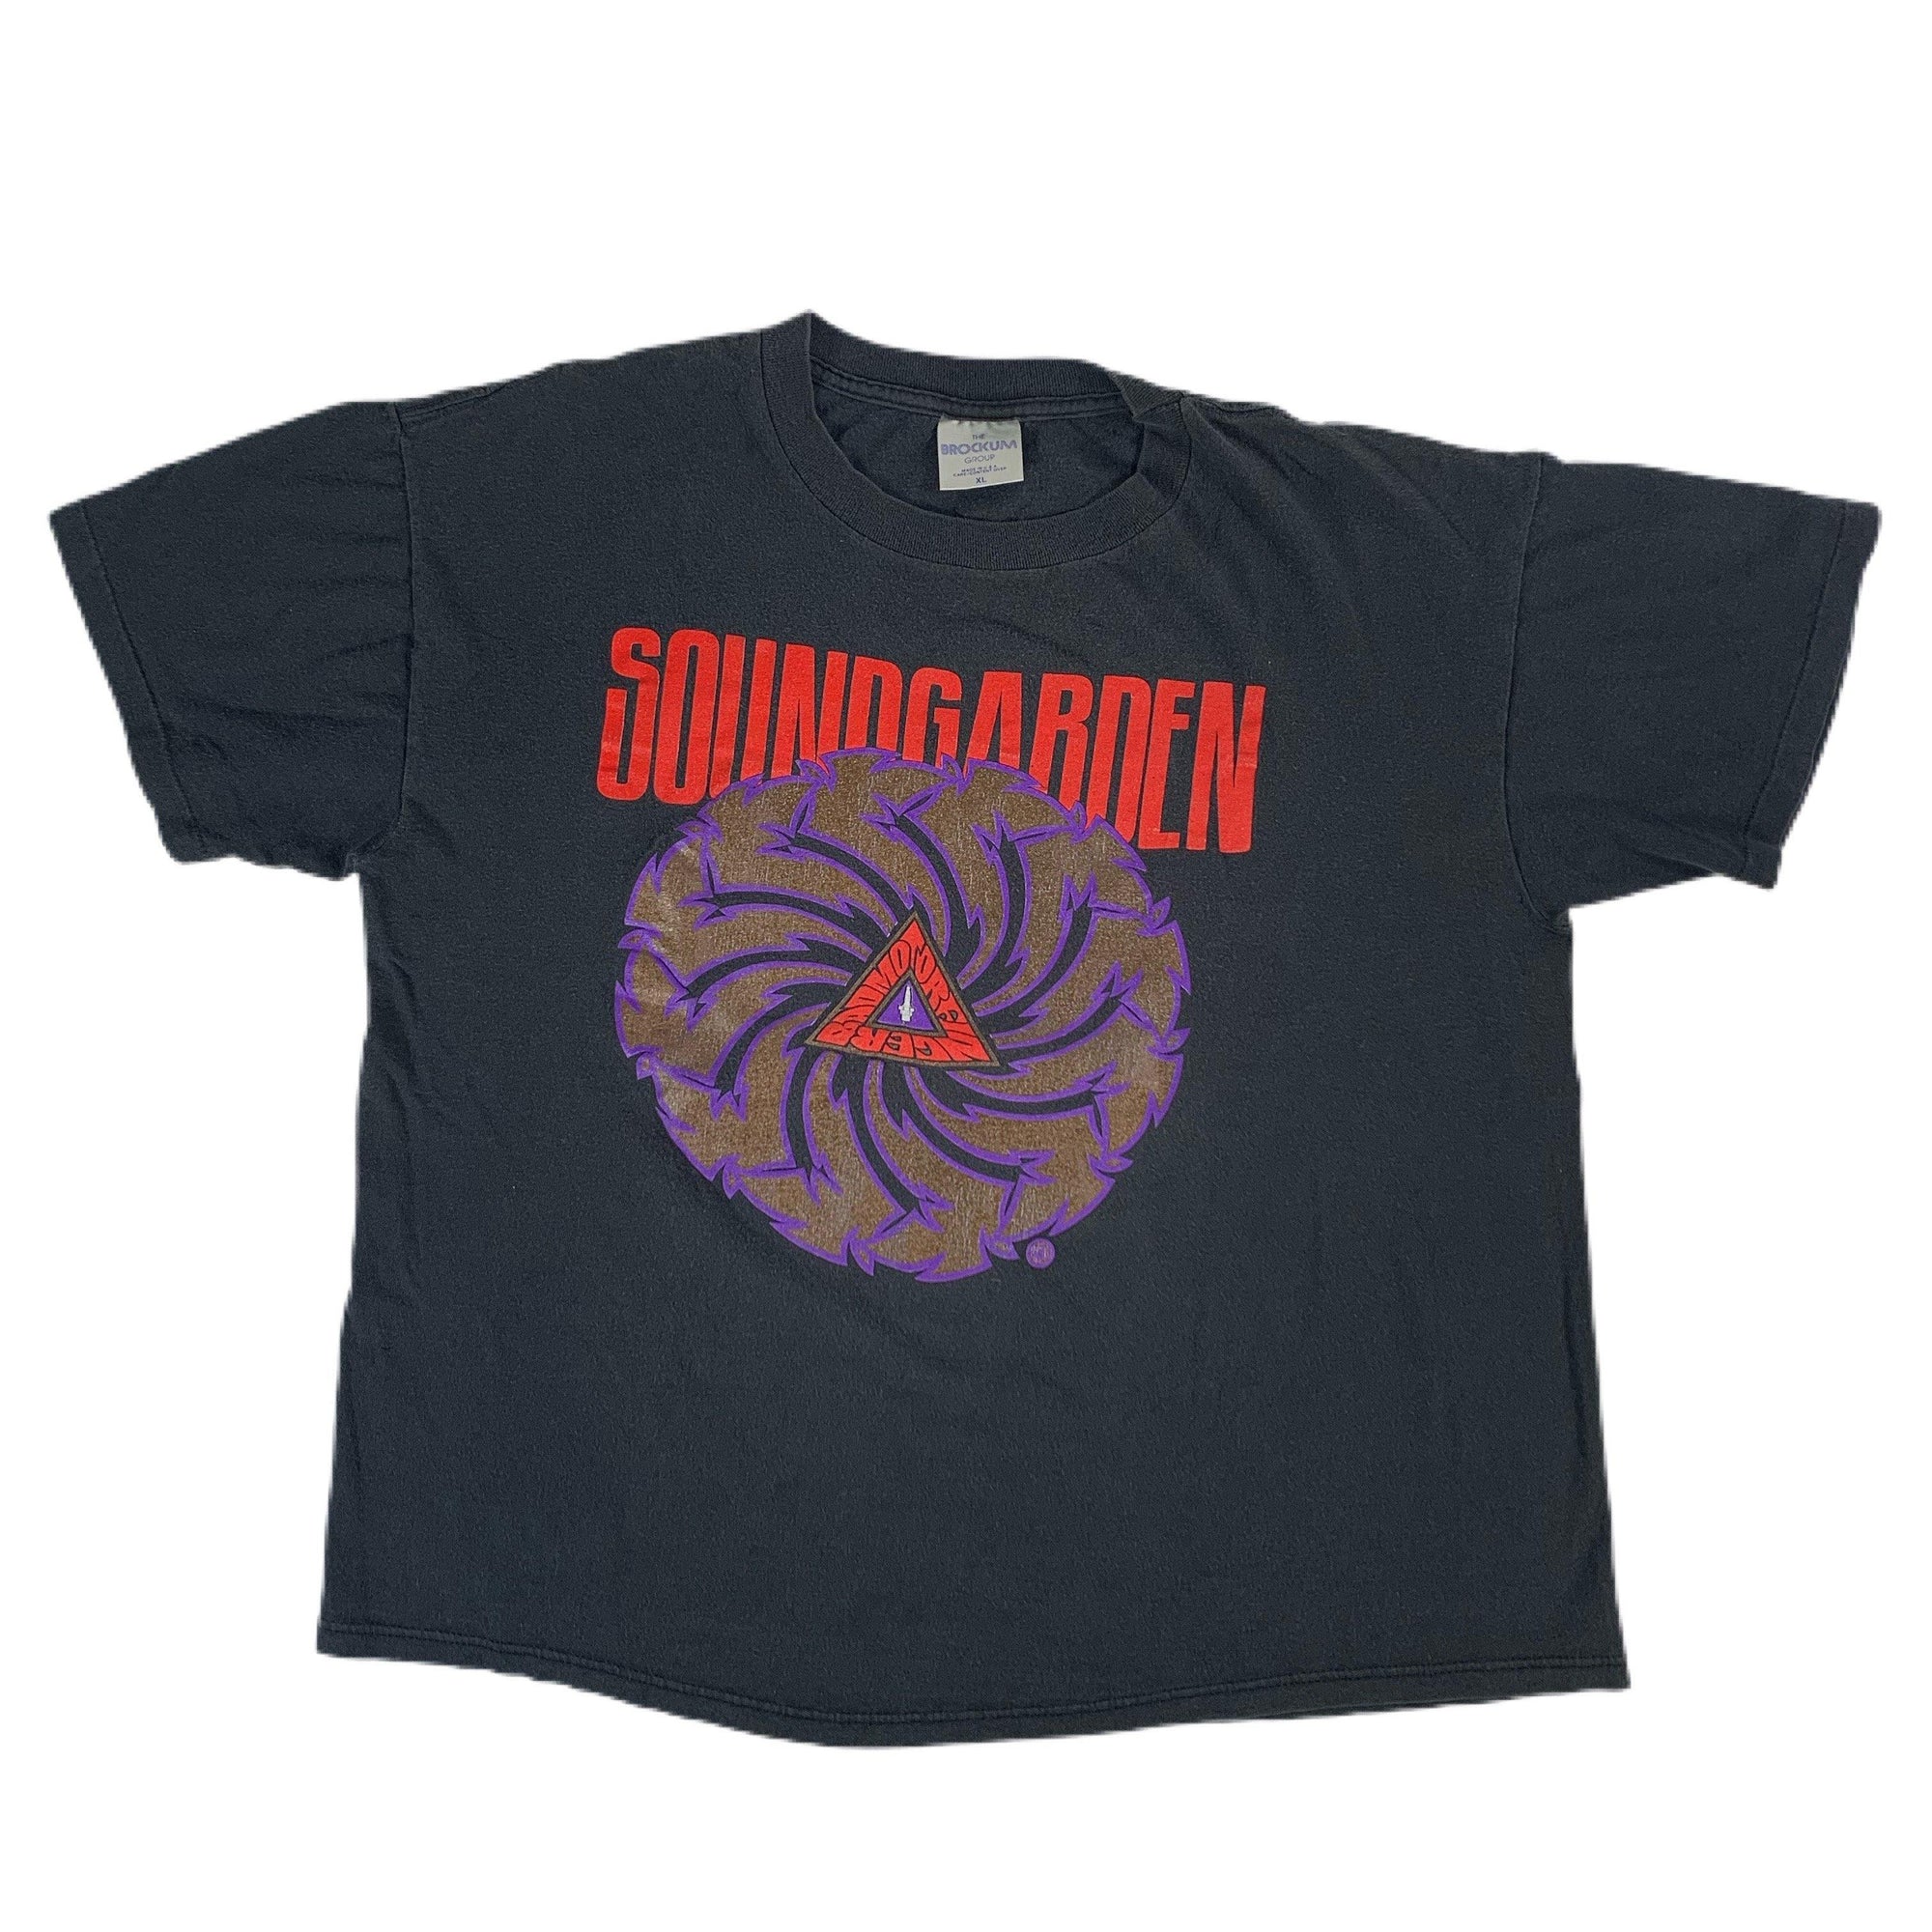 Vintage Soundgarden "Badmotorfinger" Tour T-Shirt - jointcustodydc